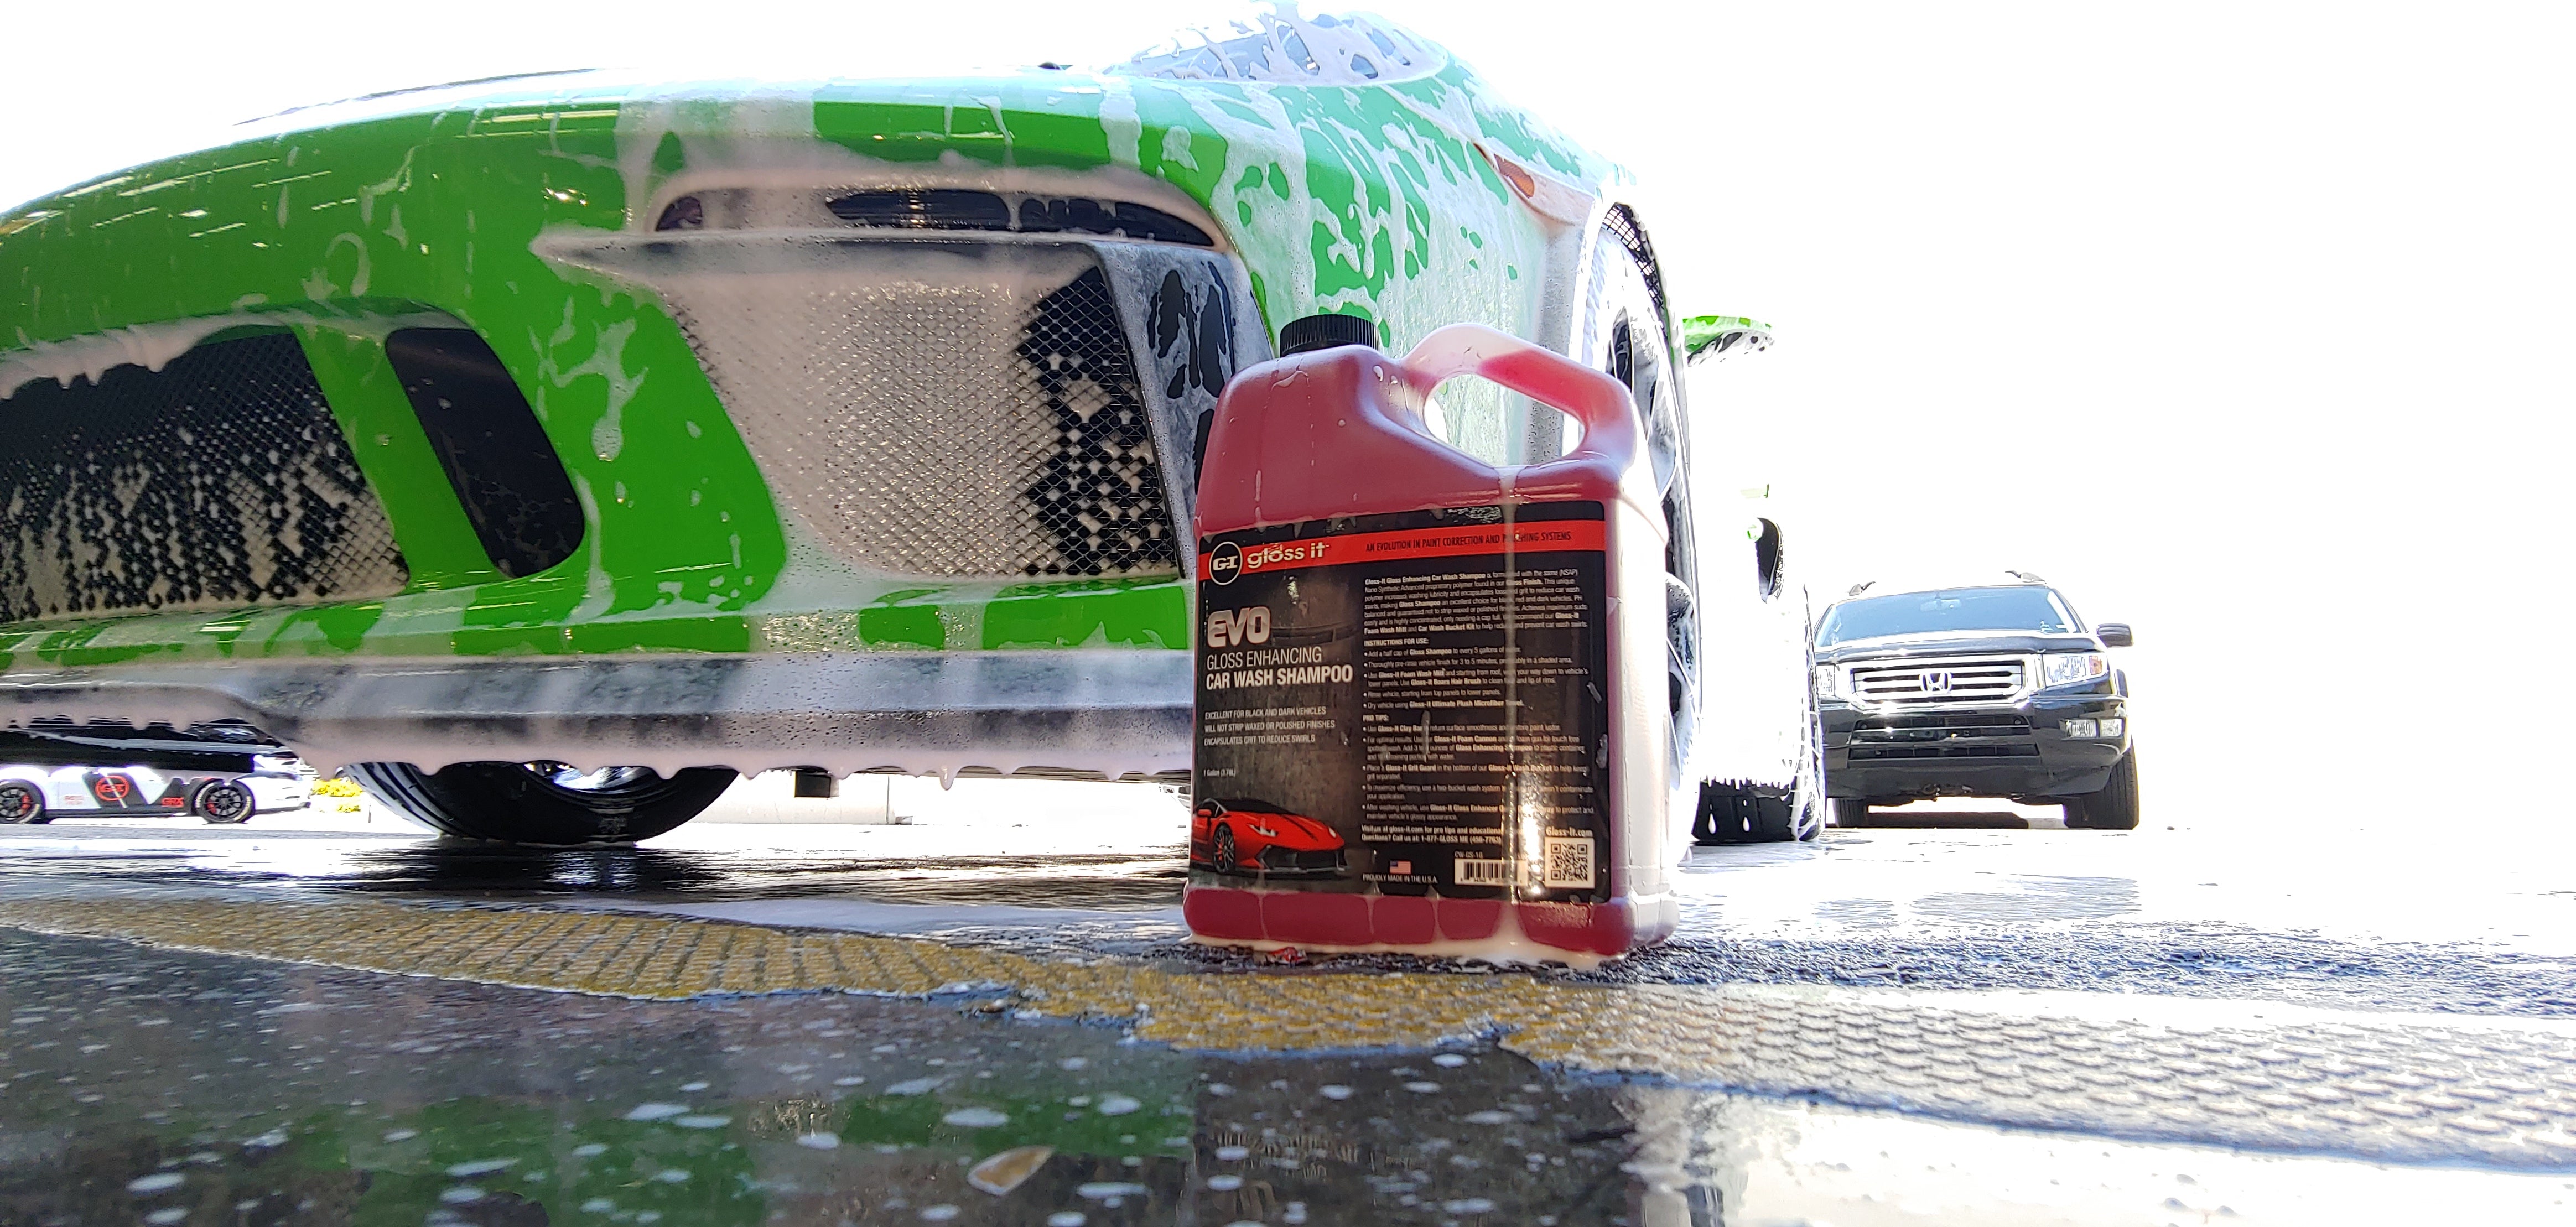 Gloss Enhancing Car Wash Shampoo